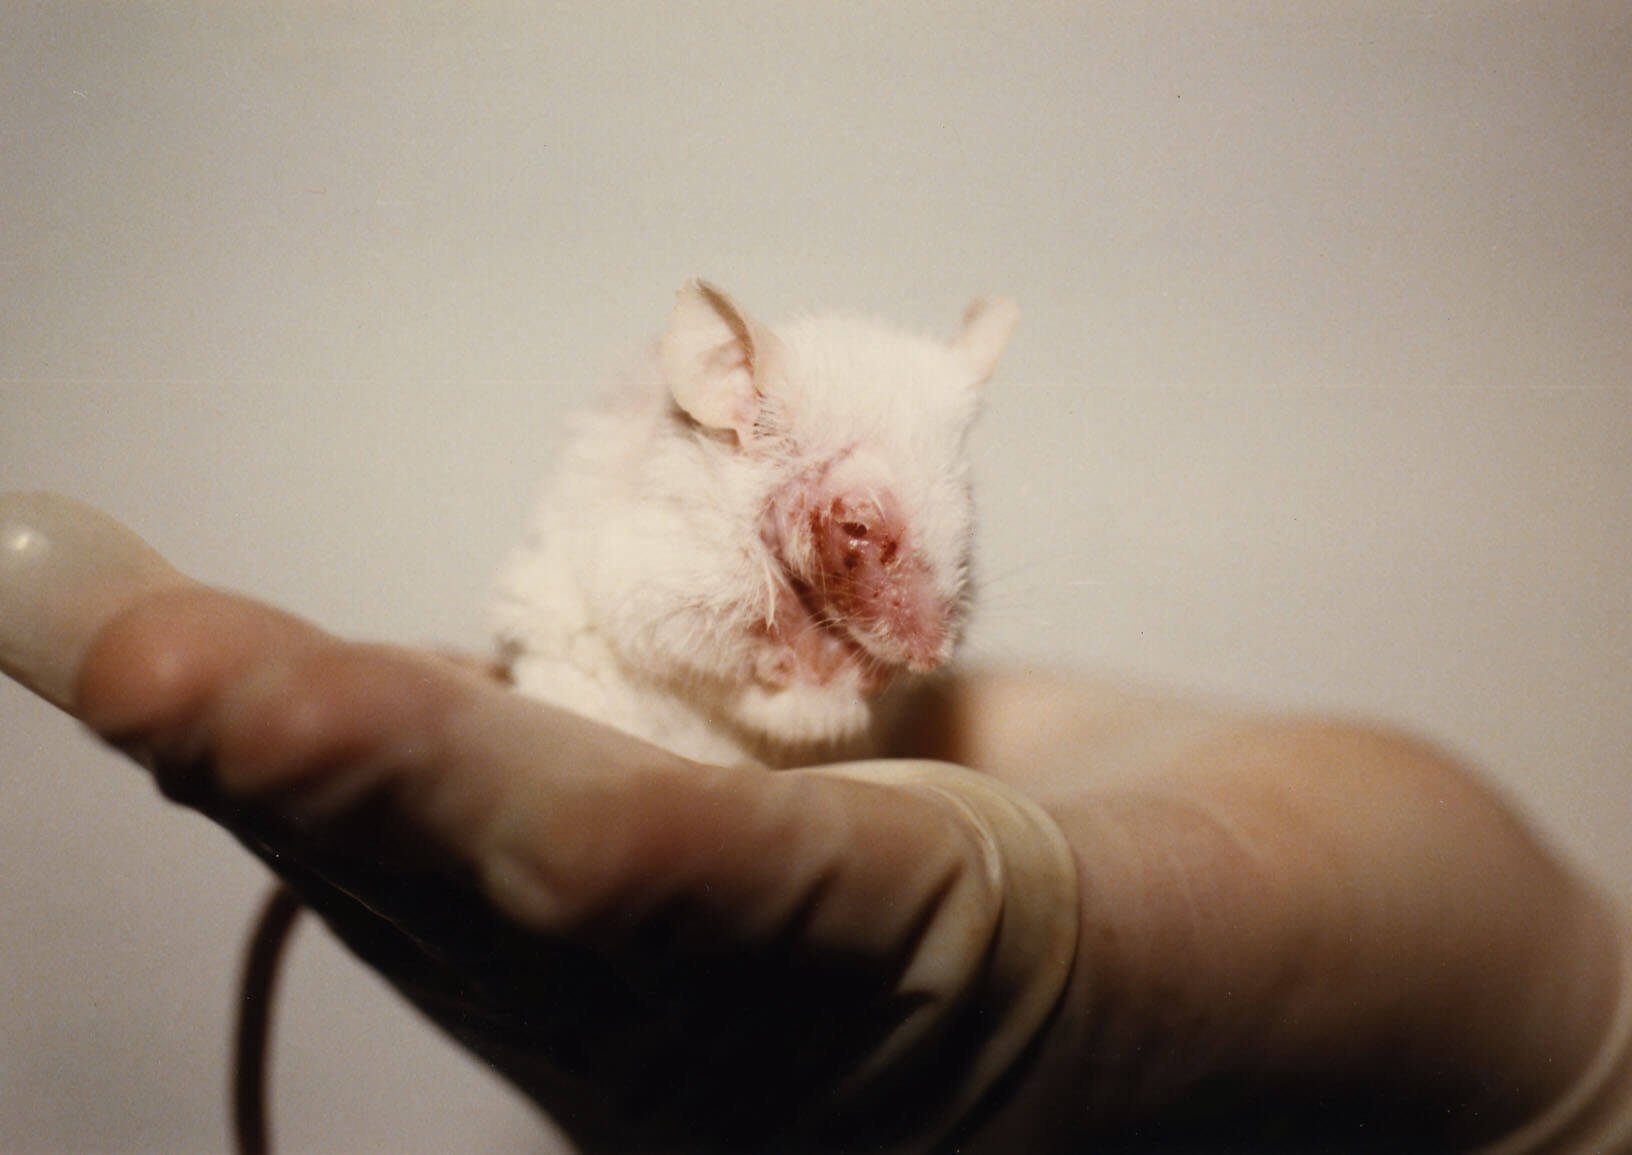 why is animal testing cruel